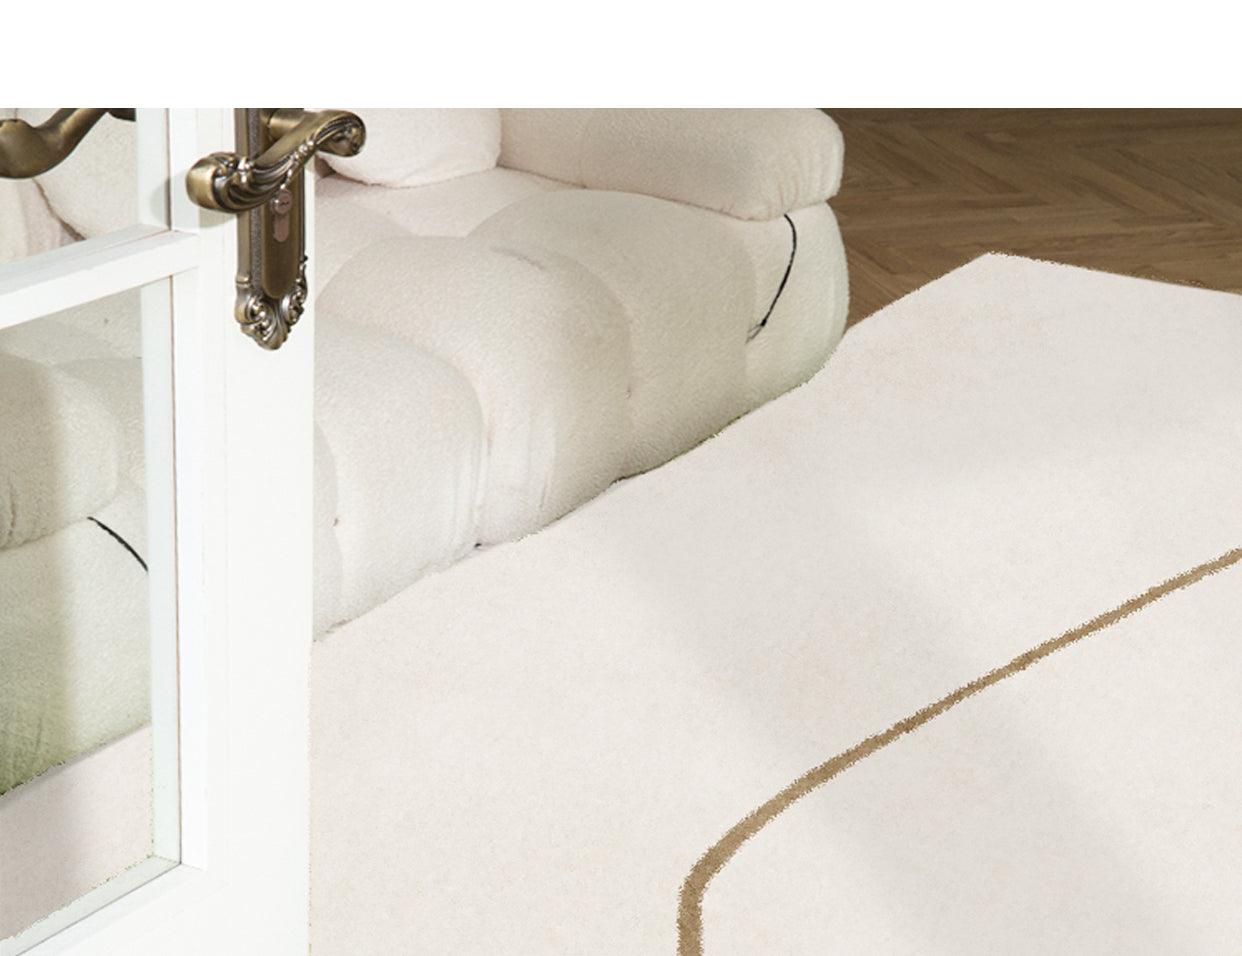 Modern Light Luxury Art Design Carpet │ Living Room Home Decor Soft Large Area Rugs Besontique